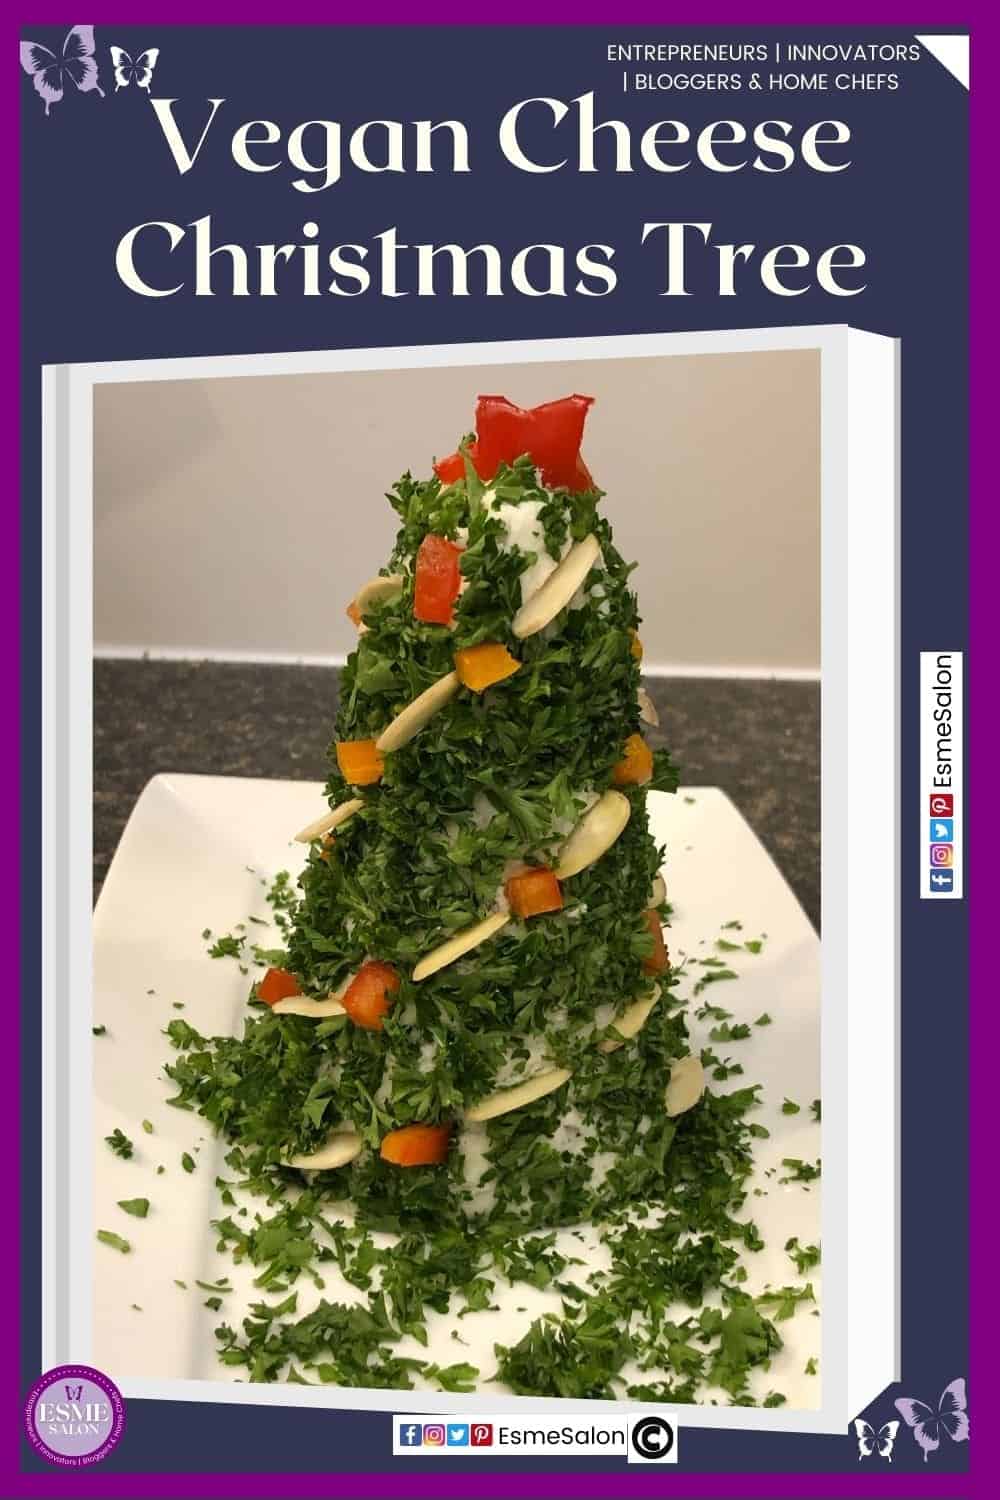 an image of a Vegan Cream Cheese Christmas Tree